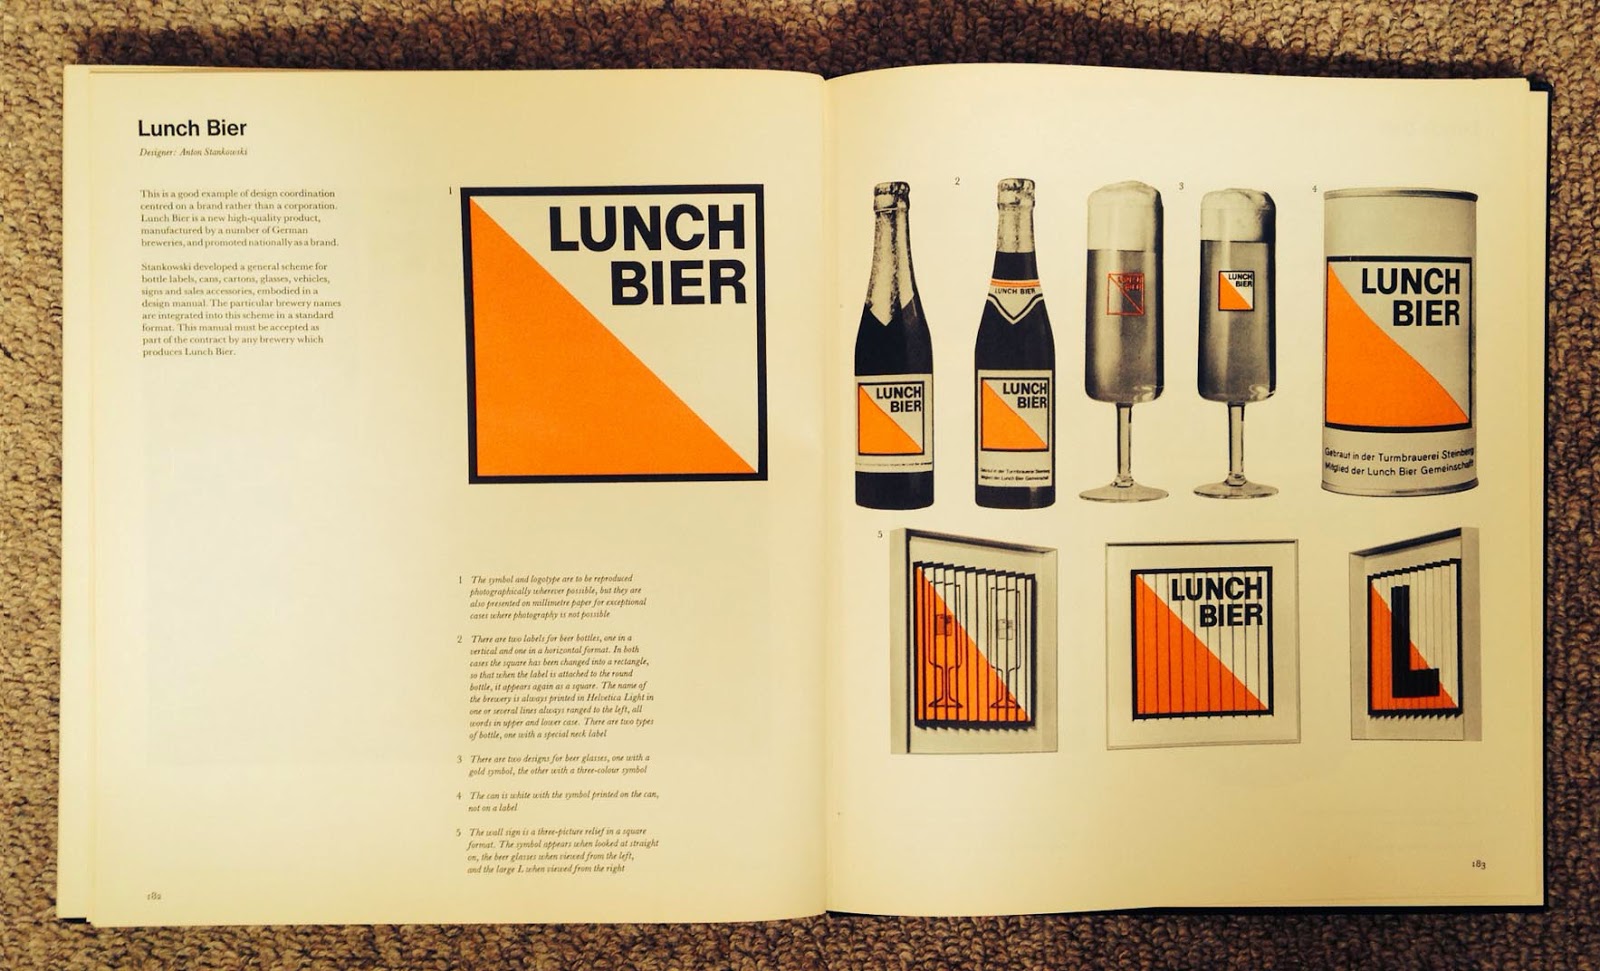 Lunch Bier logo and Bottles